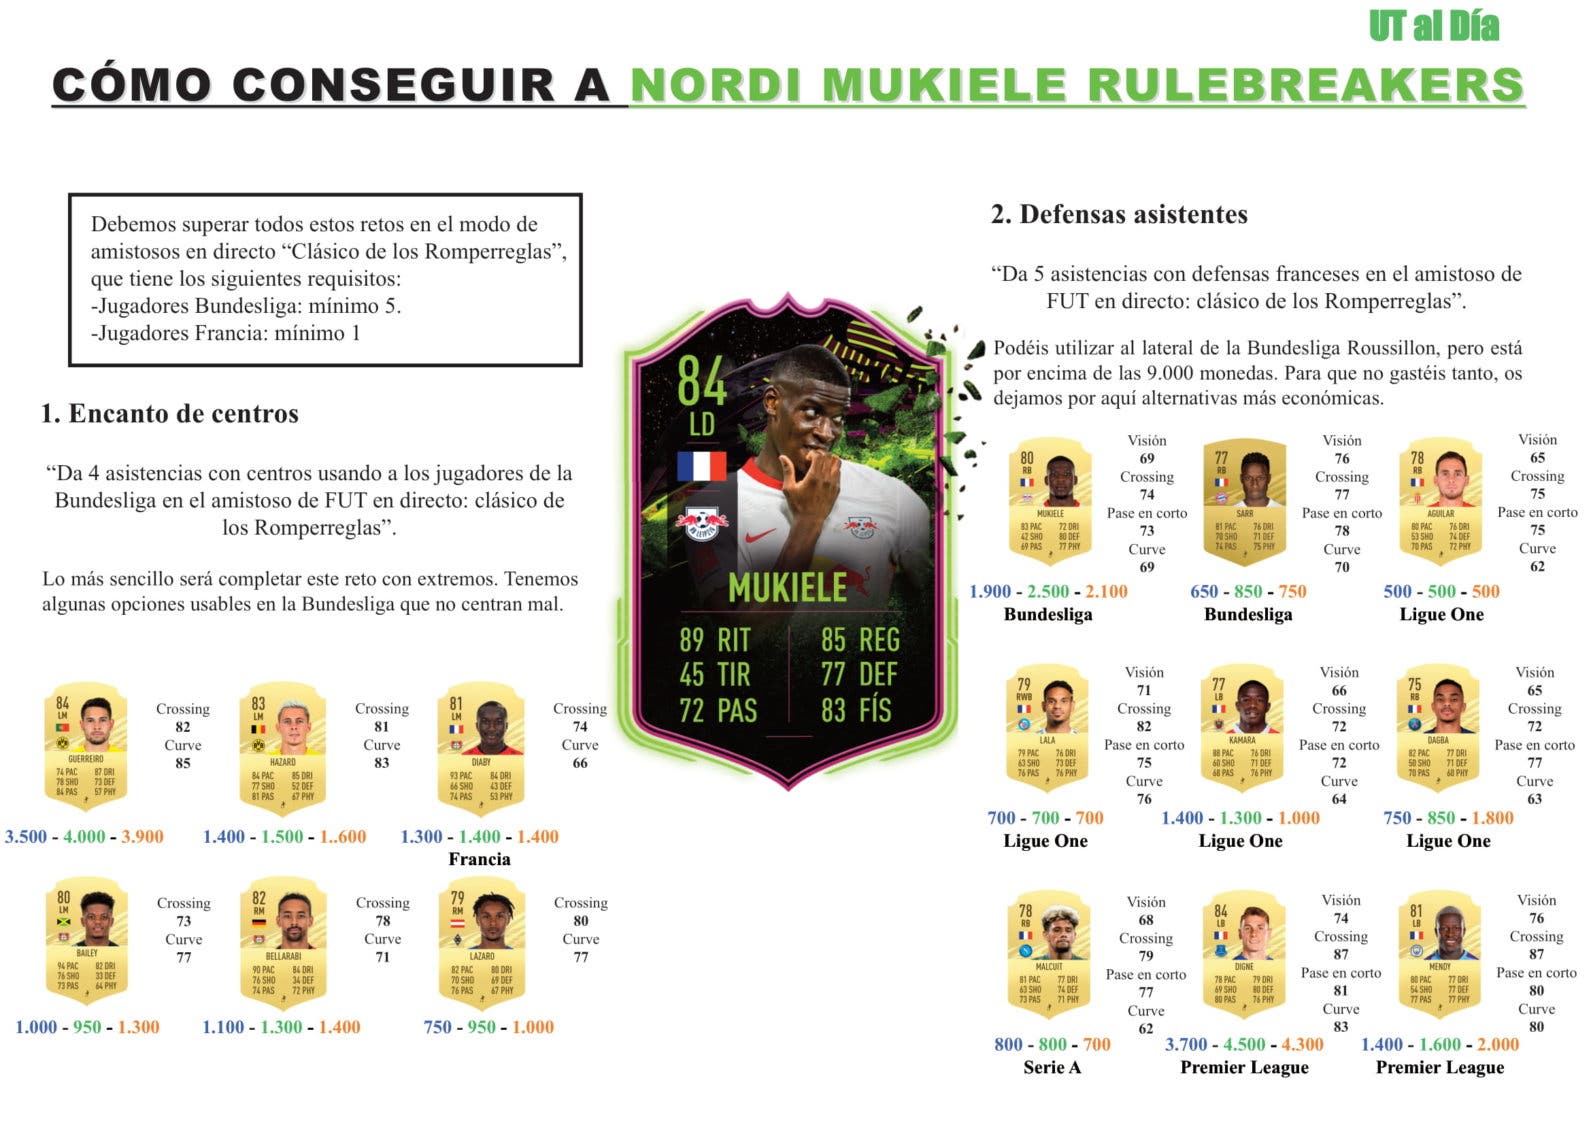 Guia dos Rulebreakers em FIFA 21 Ultimate Team 